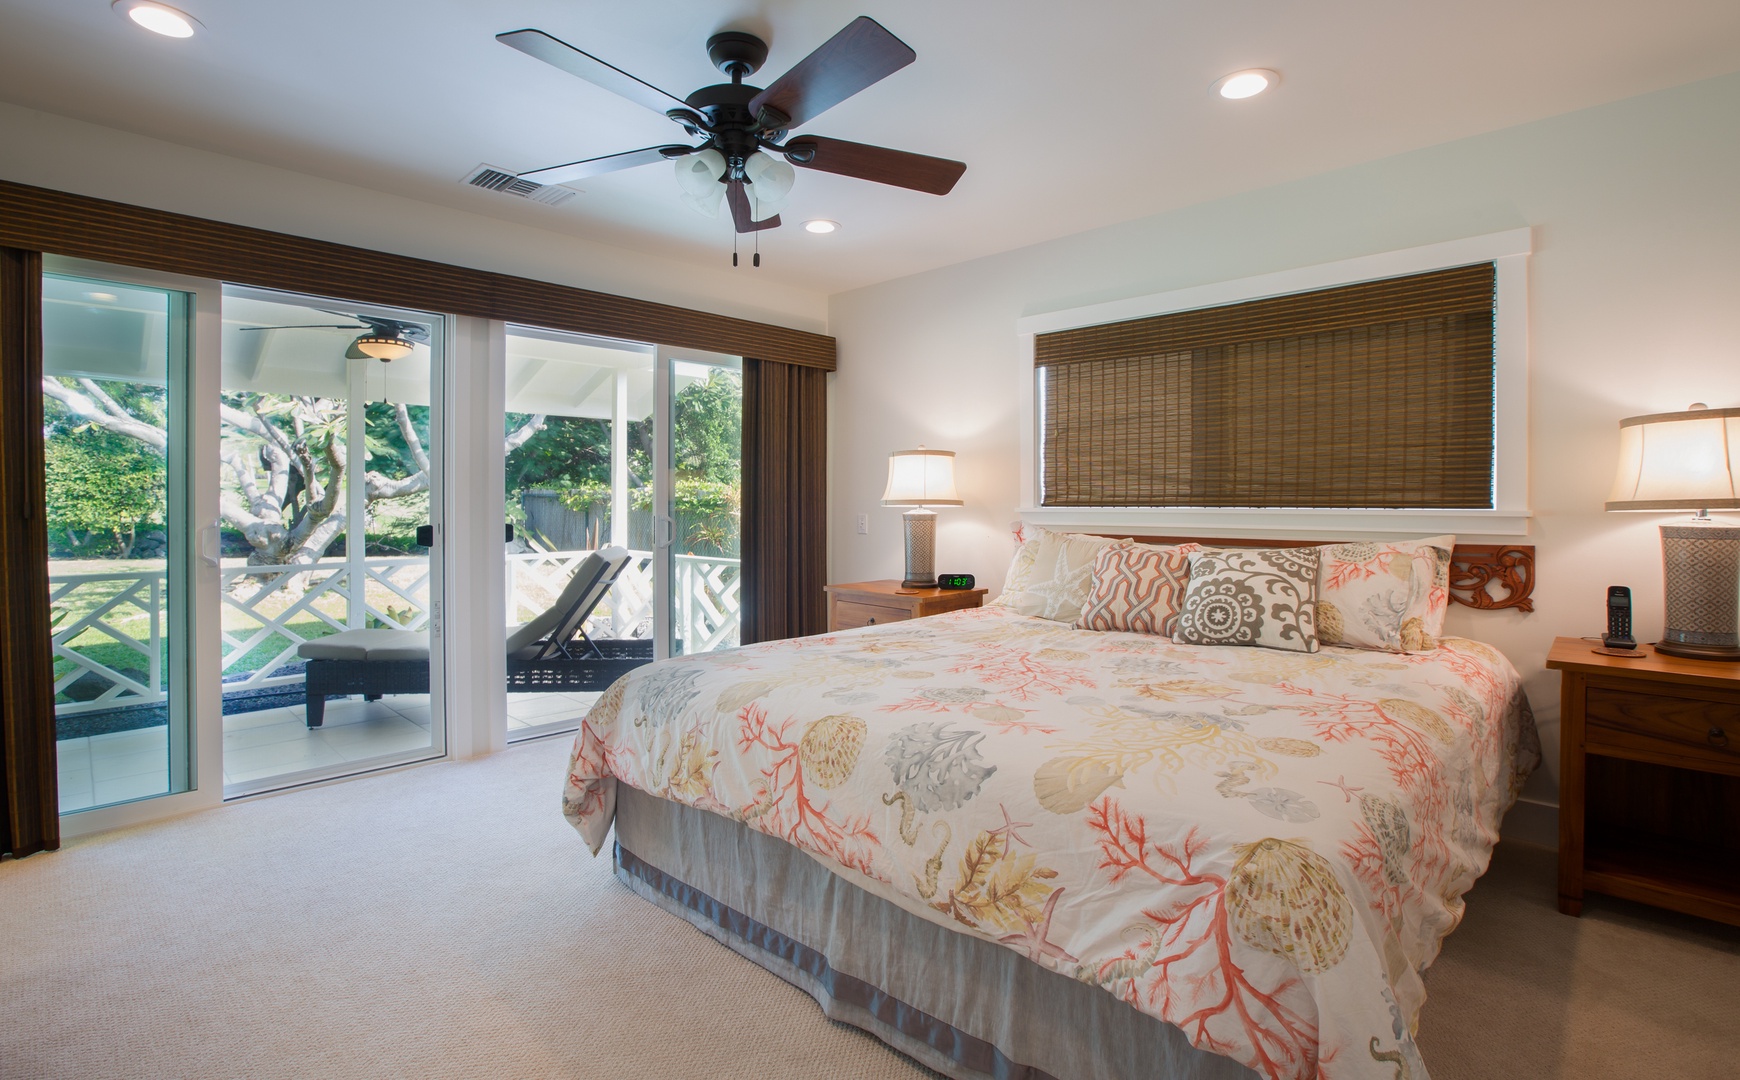 Kailua Kona Vacation Rentals, He'eia Bay Beach Bungalow (Big Island) - Primary bedroom with lanai access.